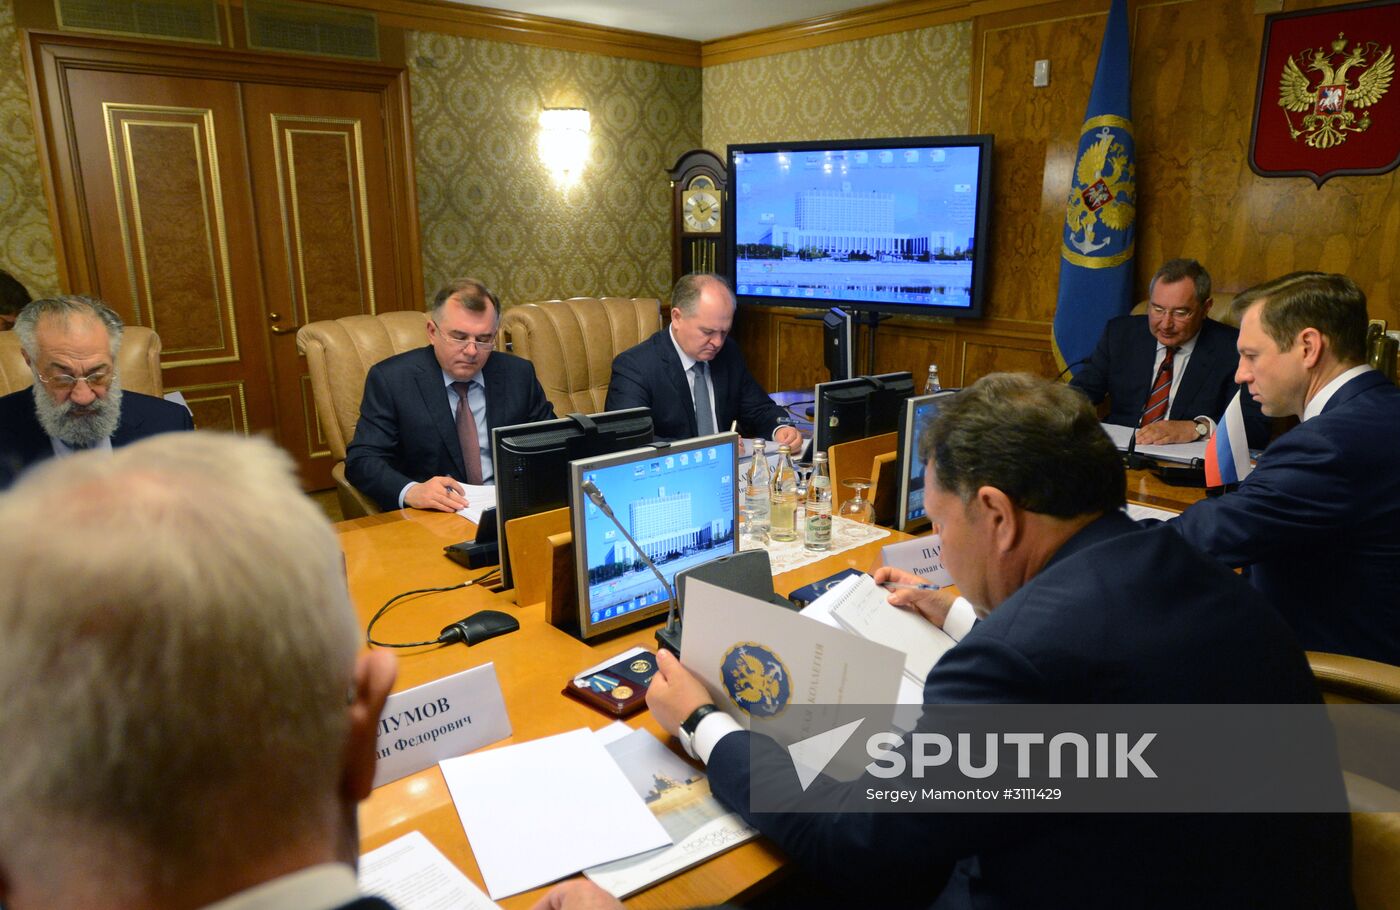 Deputy Prime Minister Dmitry Rogozin chairs Marine Board meeting